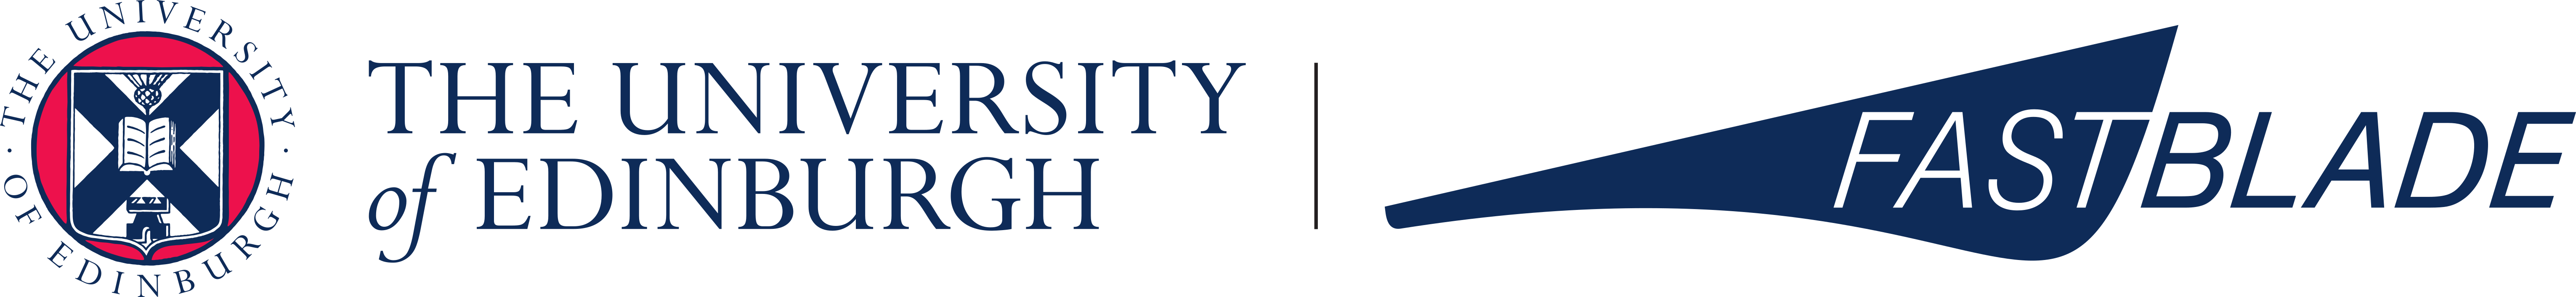 University of Edinburgh and FastBlade logos